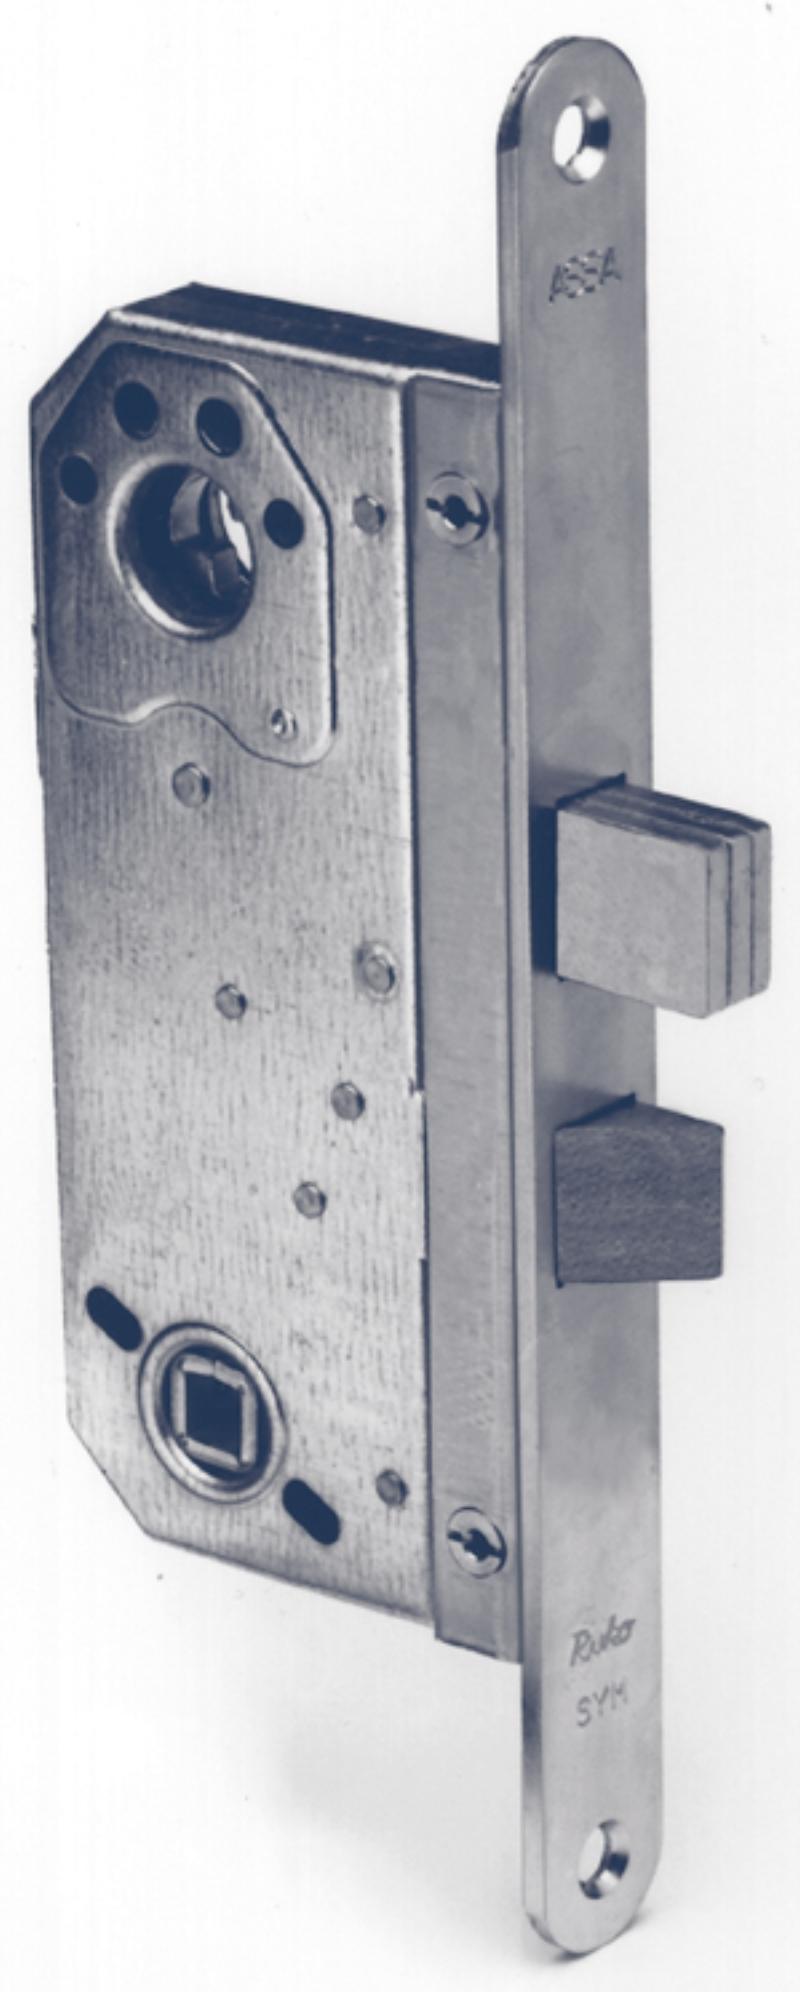 Assa locking box 565/50 z V Micro M5 (521014)